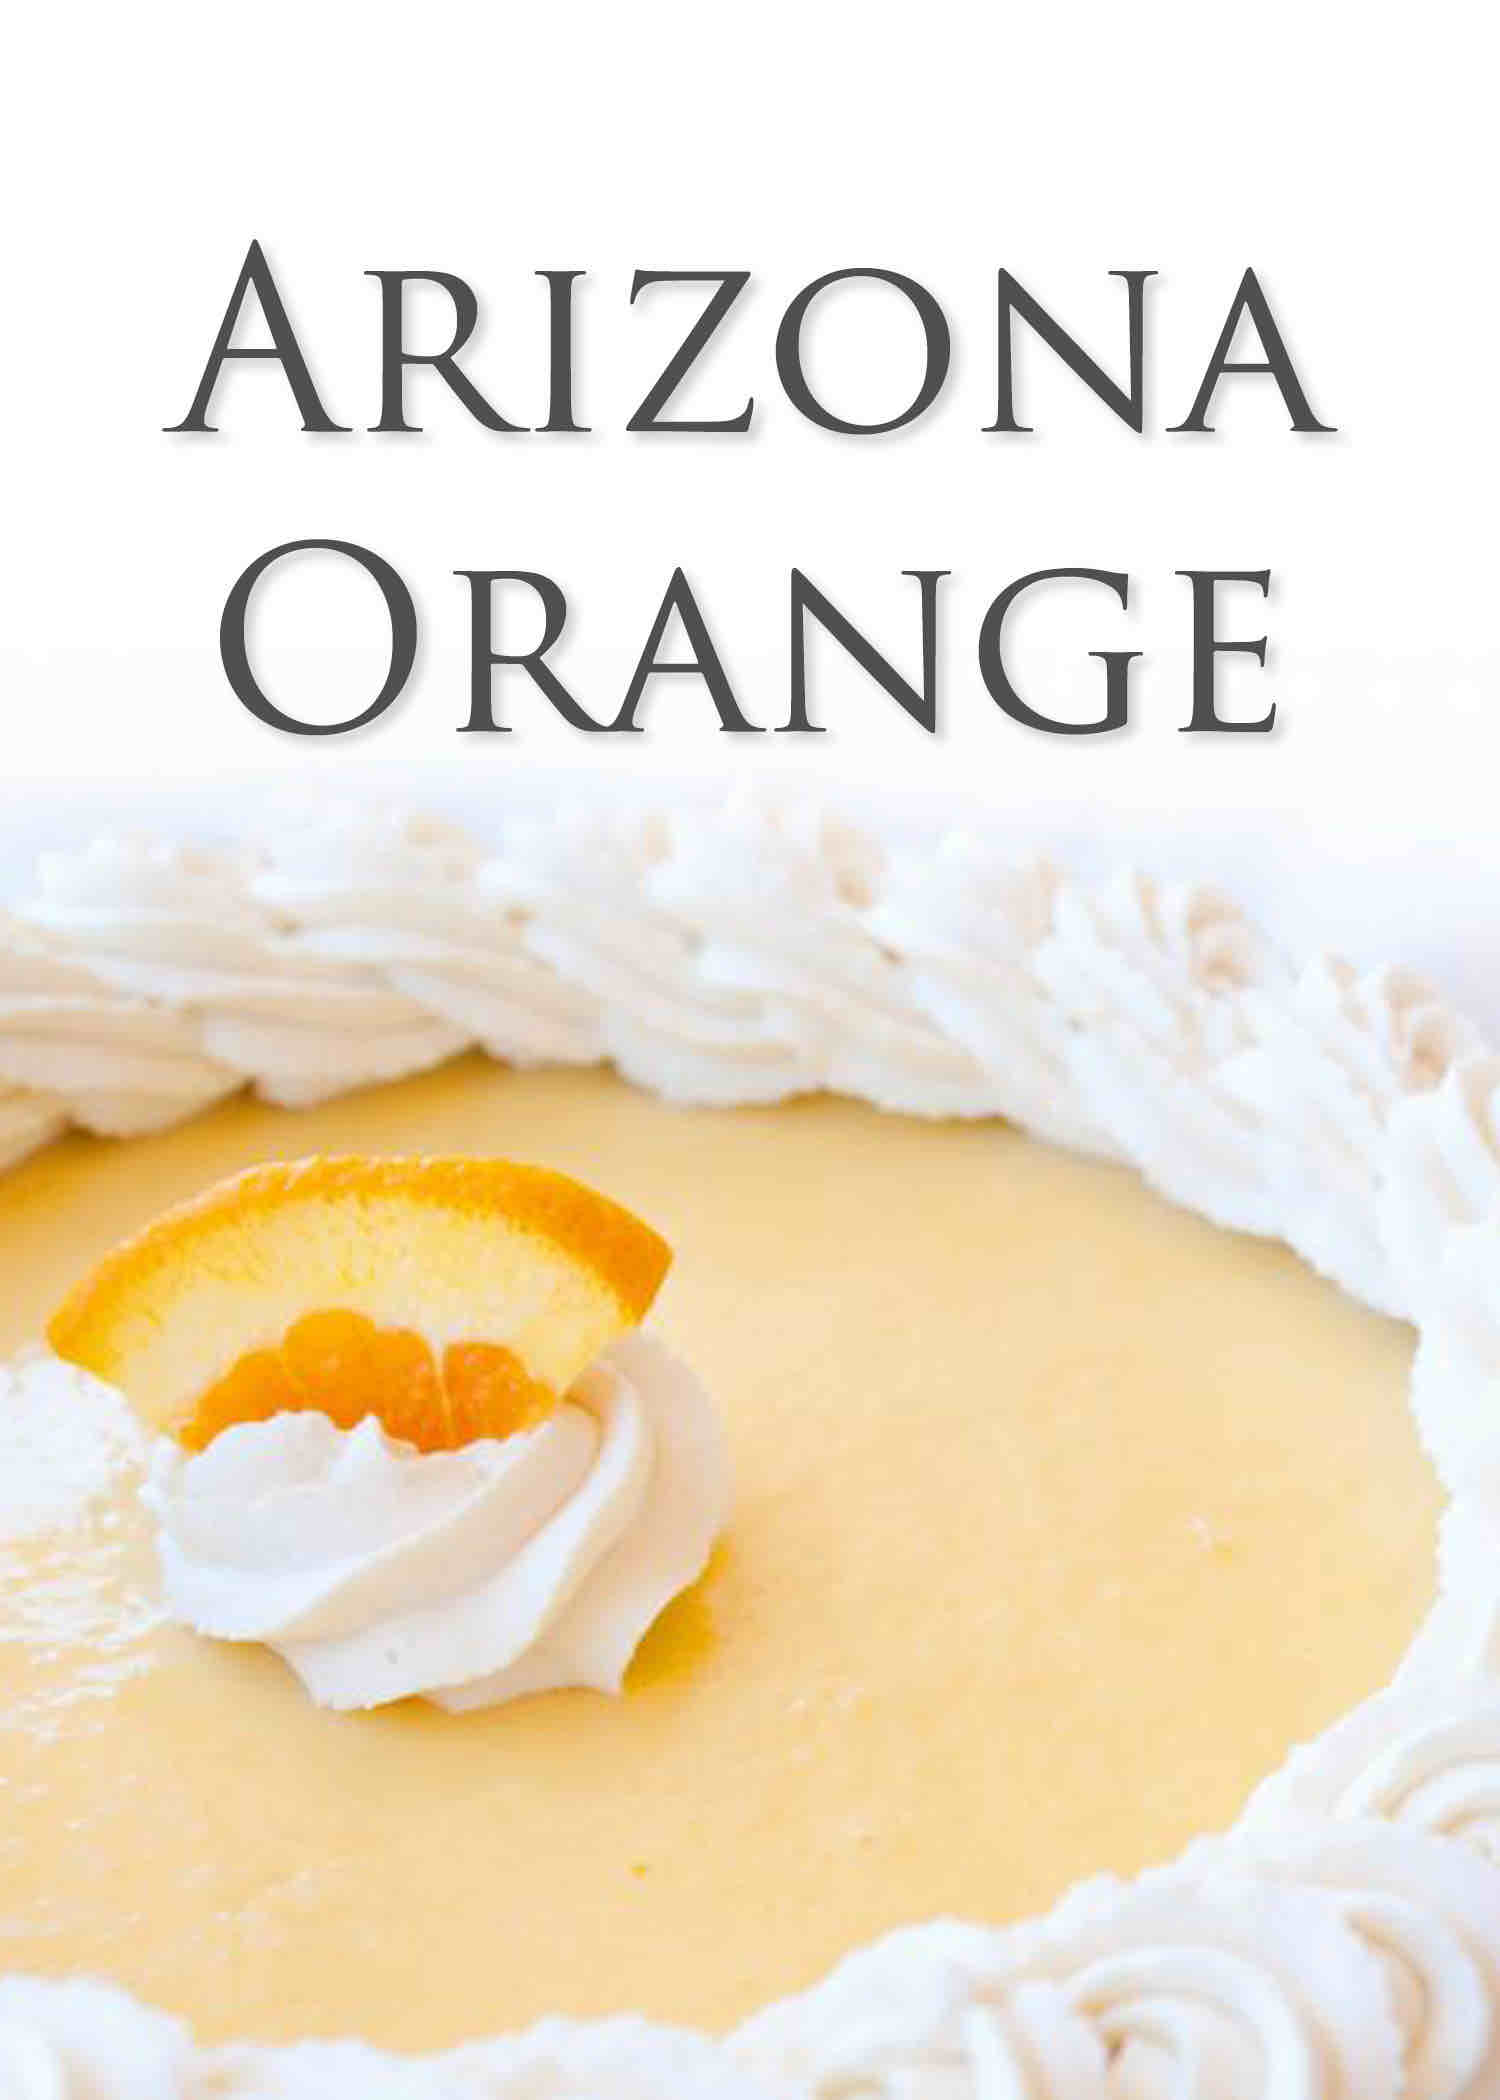 Arizona Orange